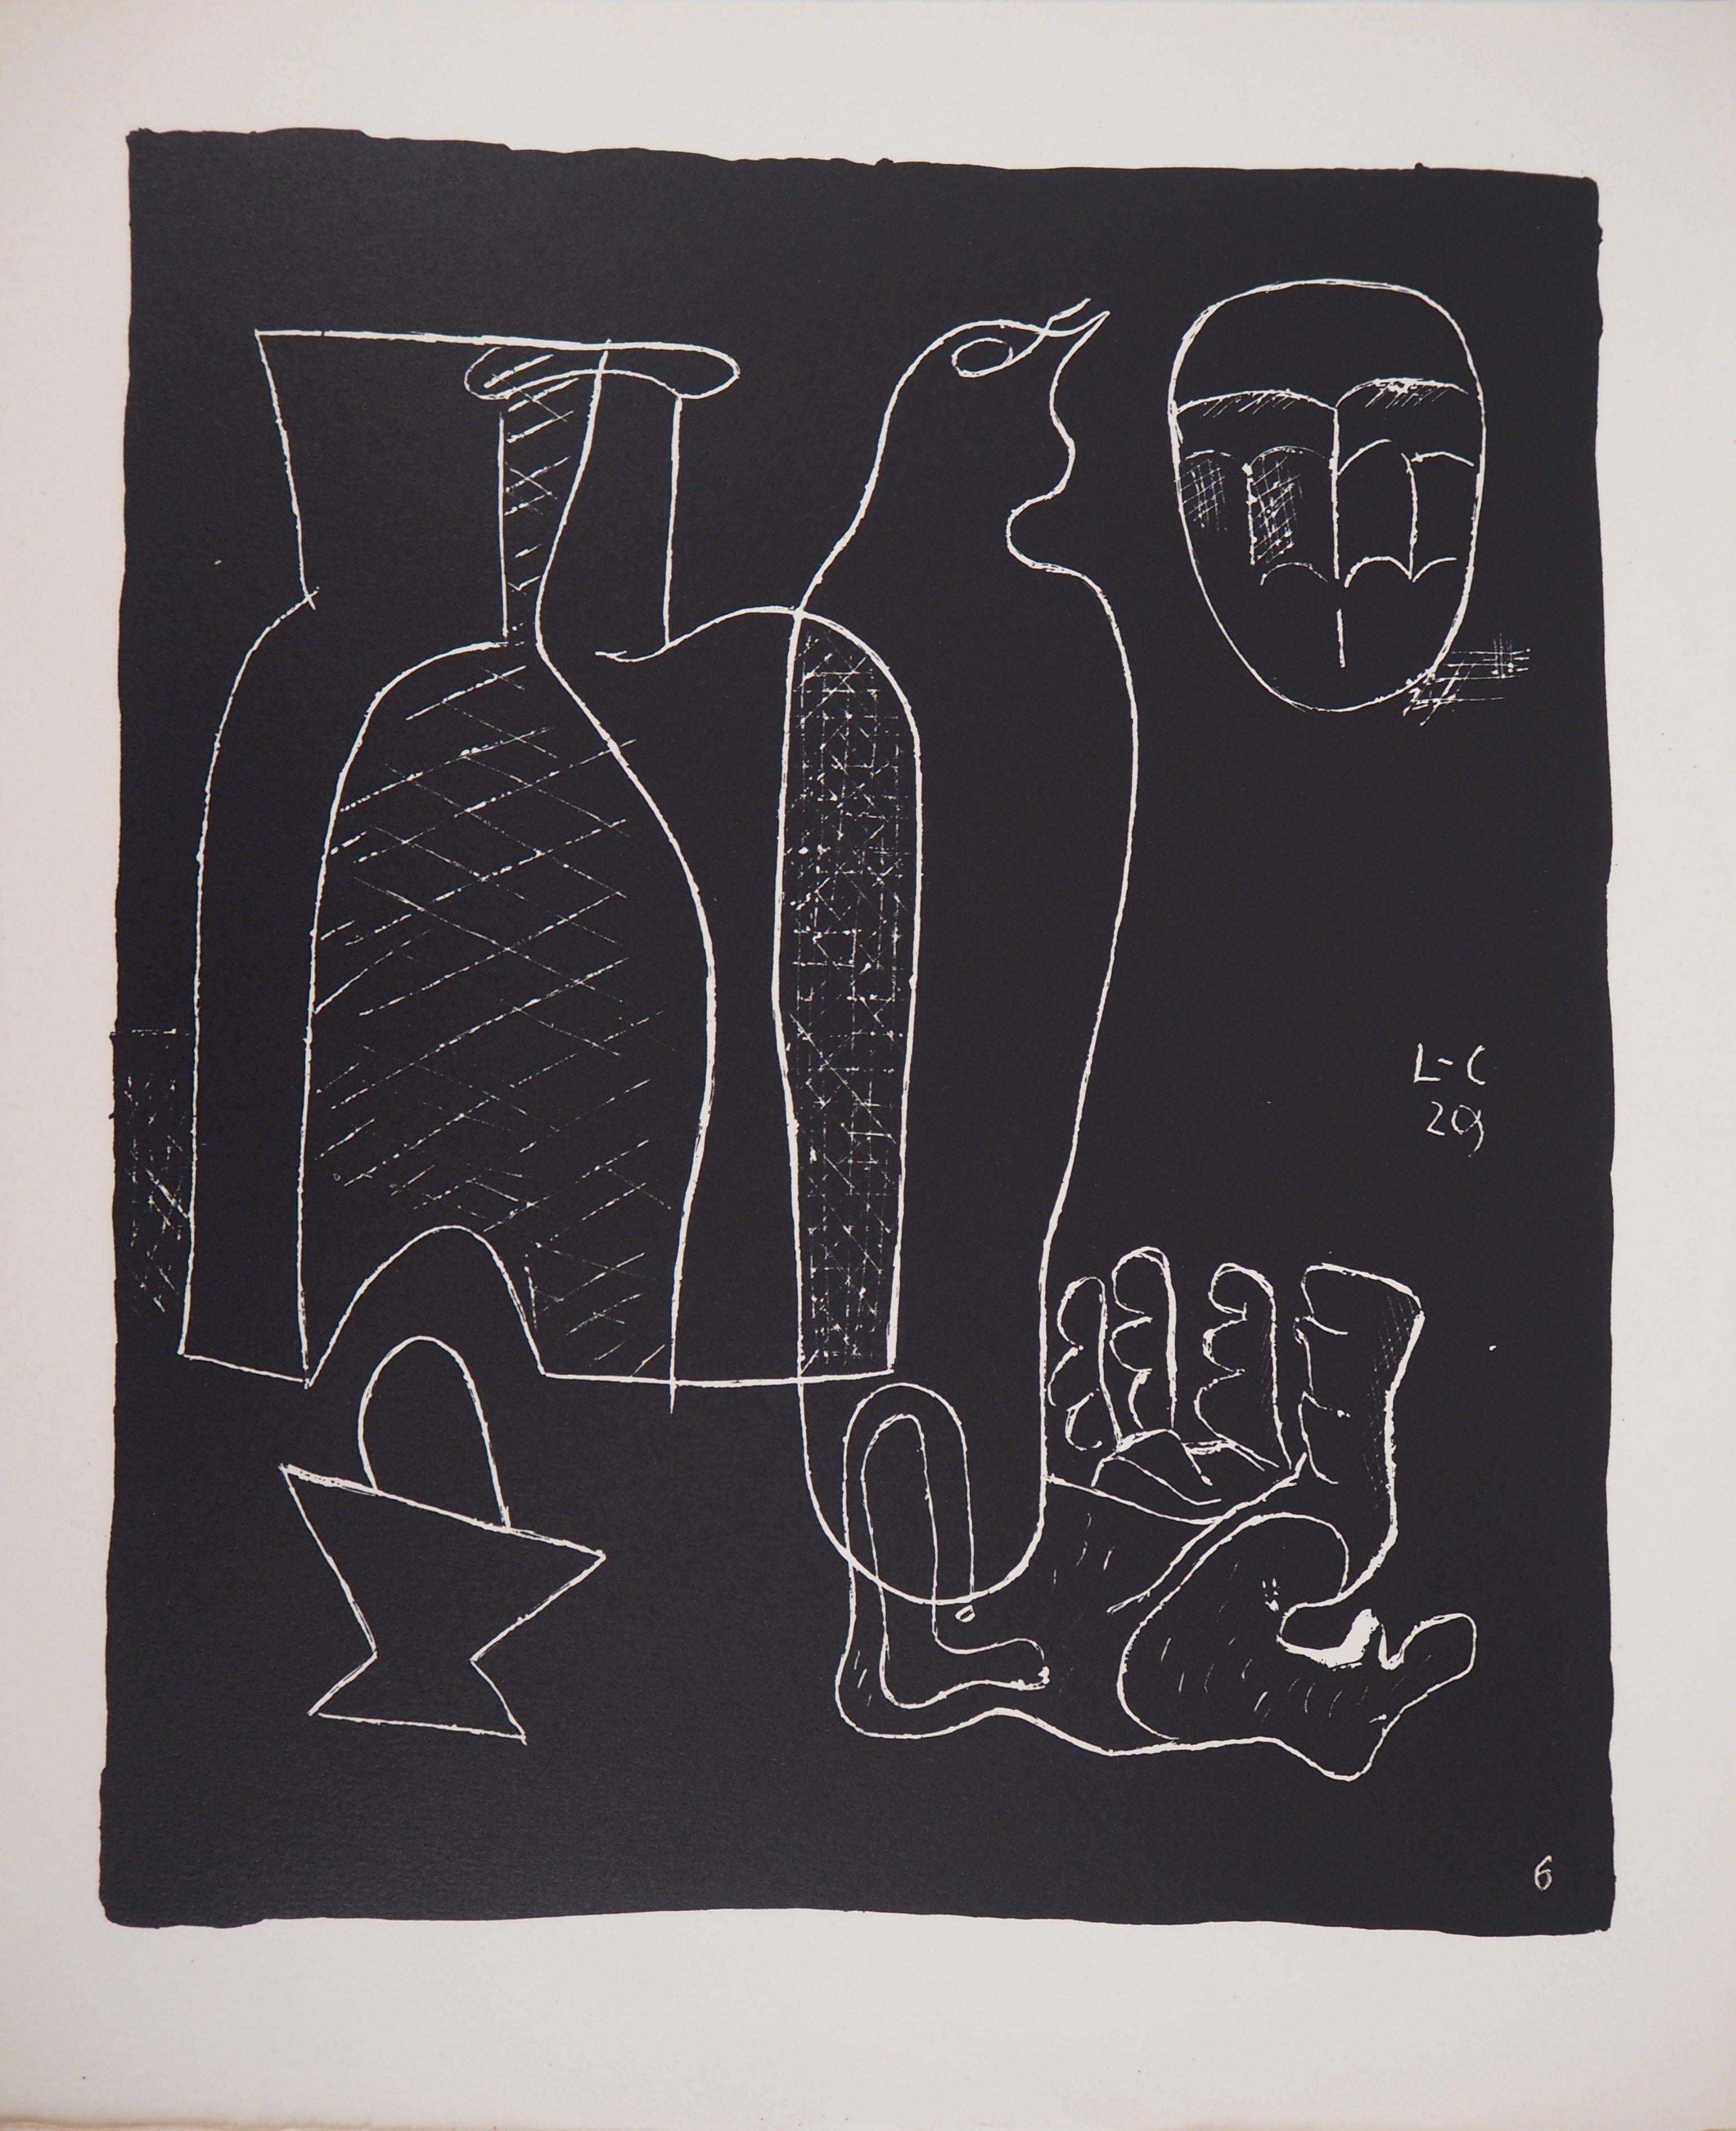 Le Corbusier Figurative Print - Still Life with Hand - Original lithograph (Atelier Michel Cassé), 1964